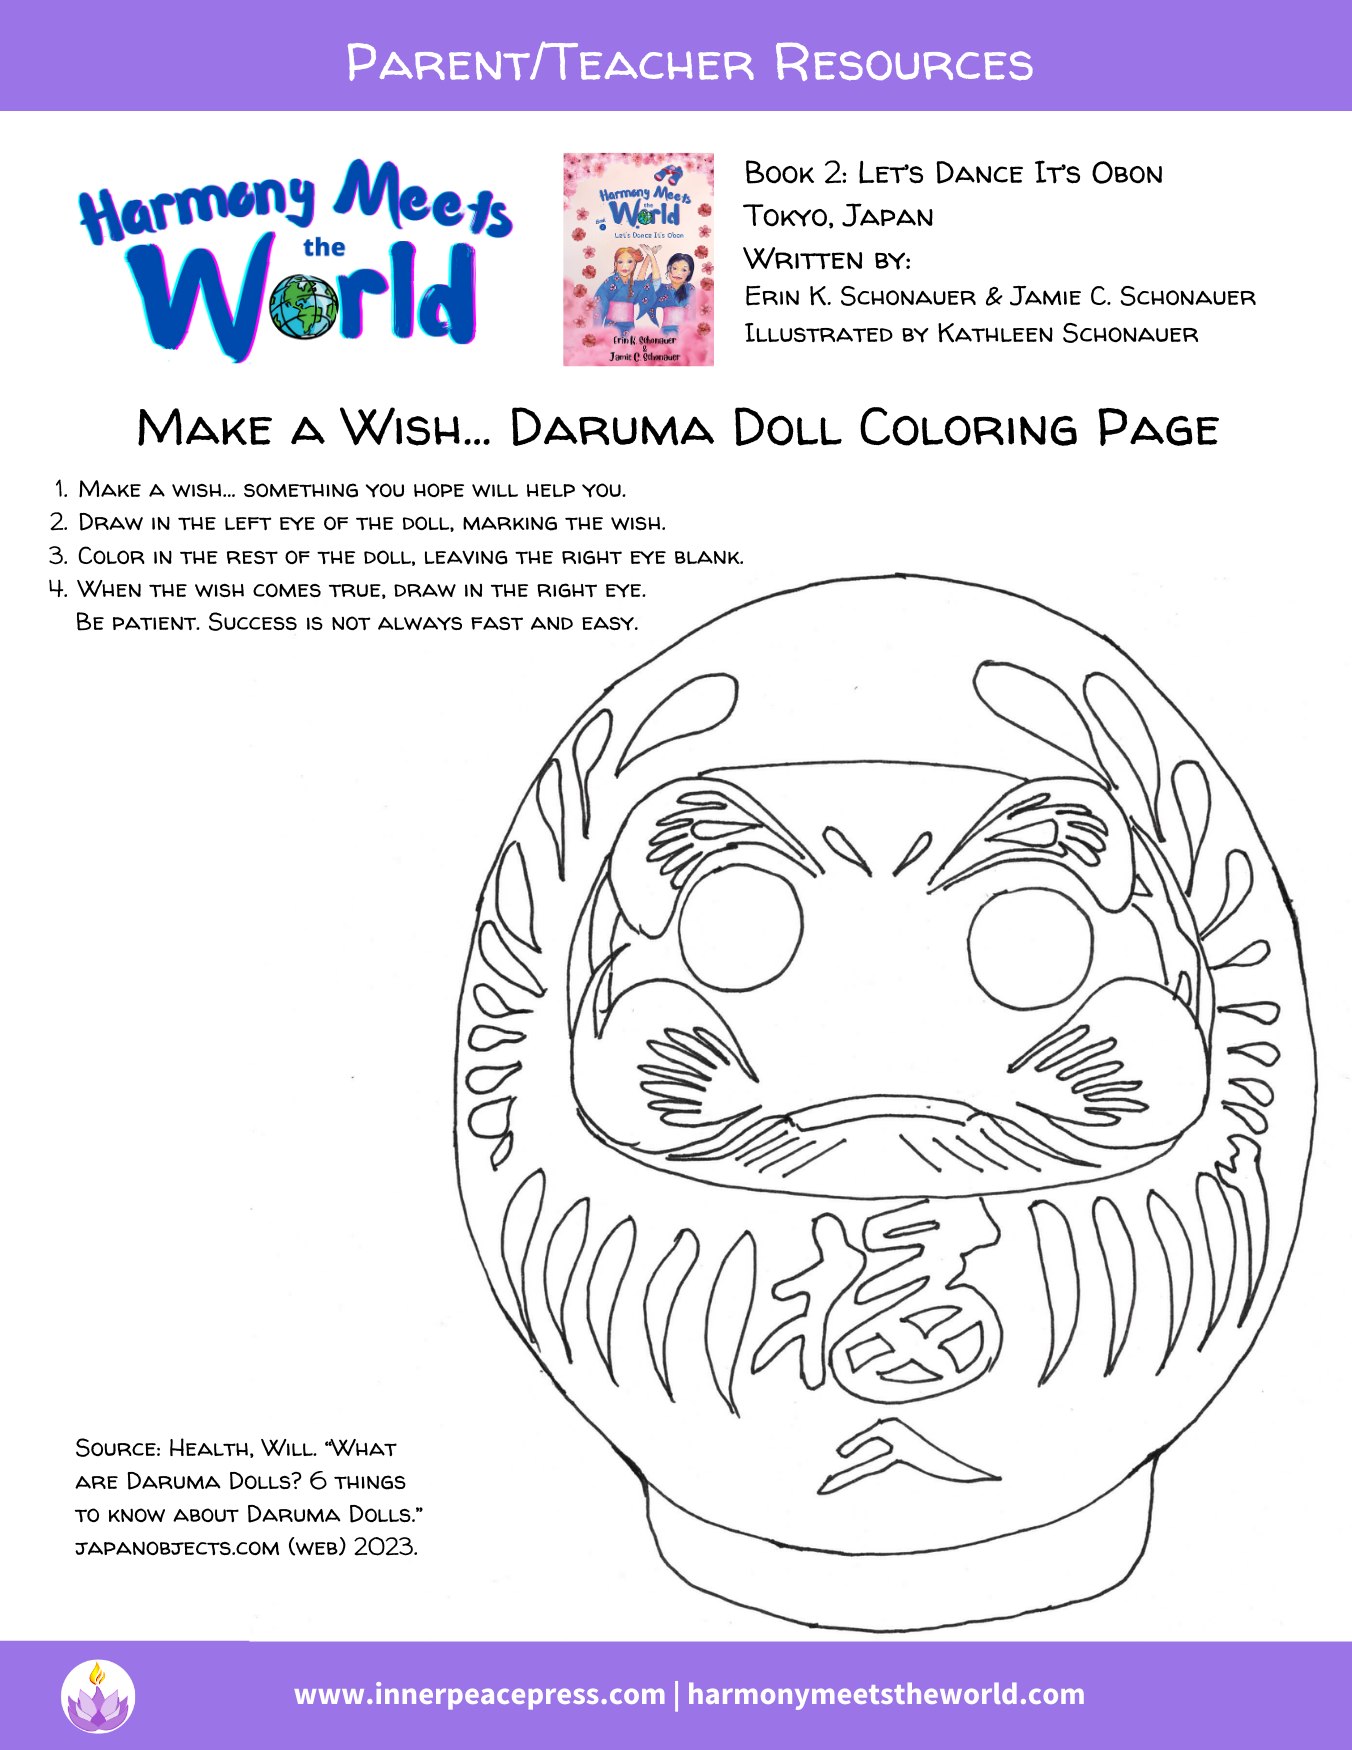 Daruma Doll Coloring Page